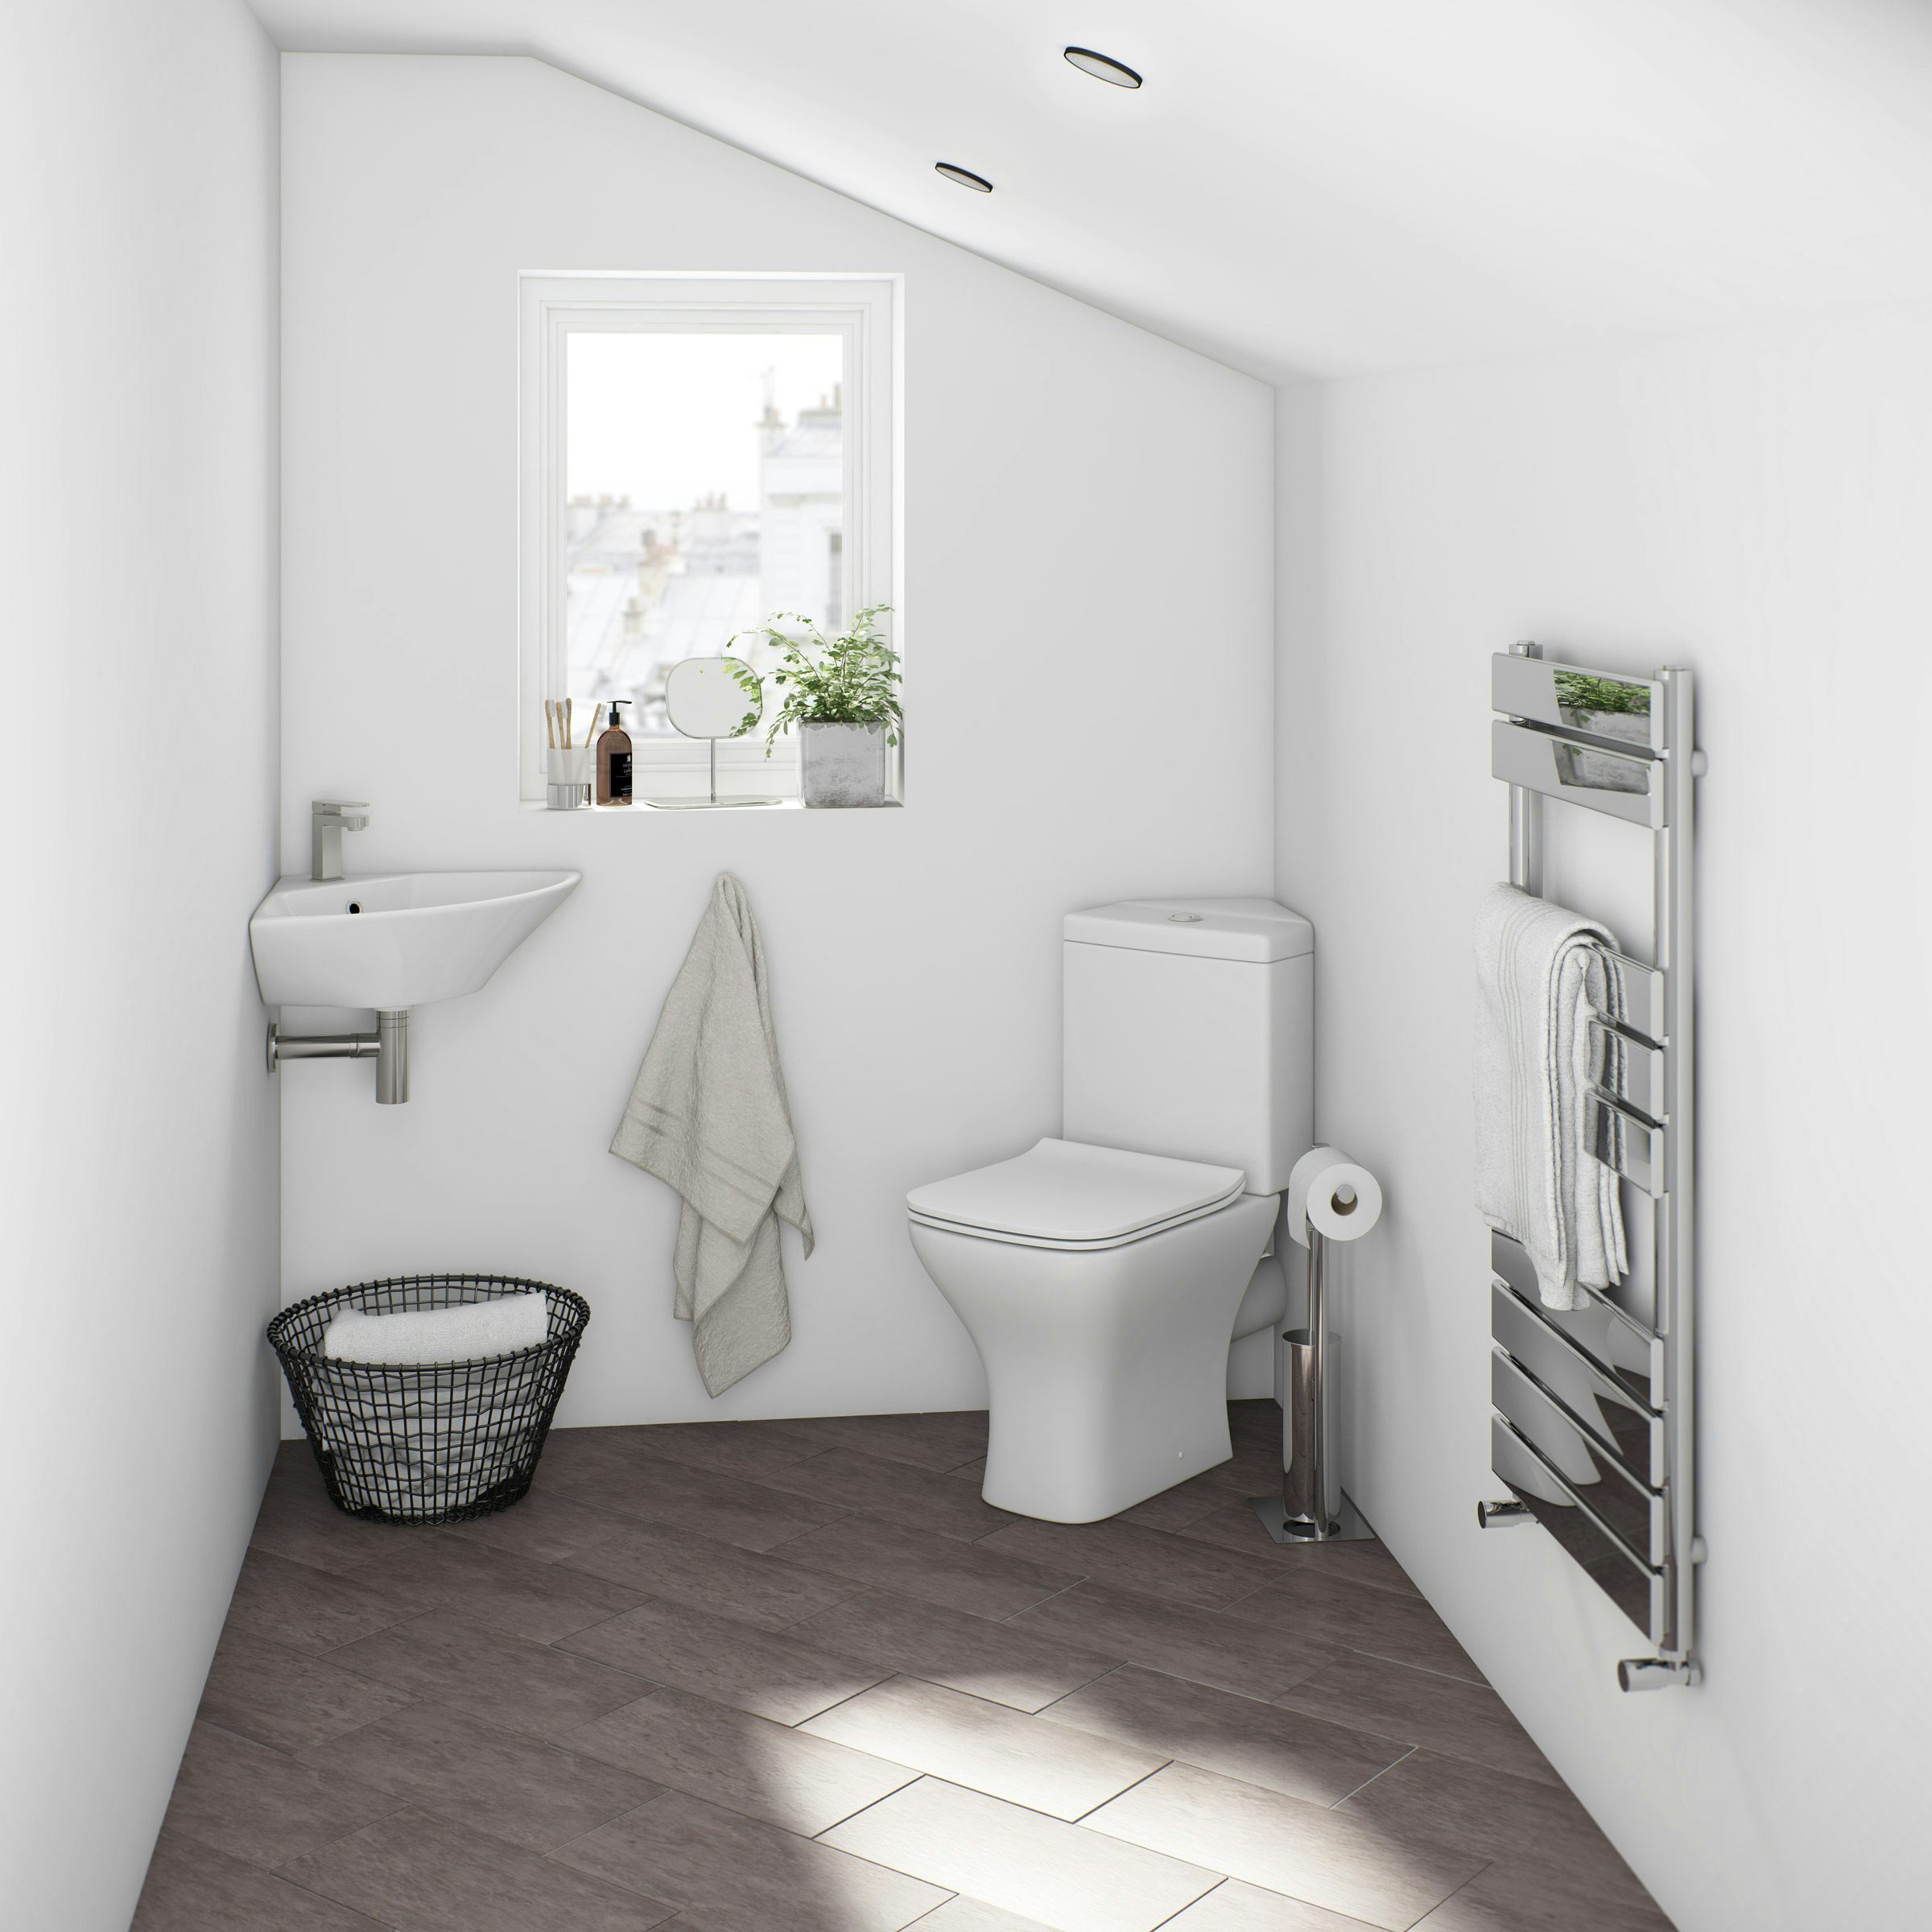 Orchard Derwent square compact corner bathroom suite in loft conversion